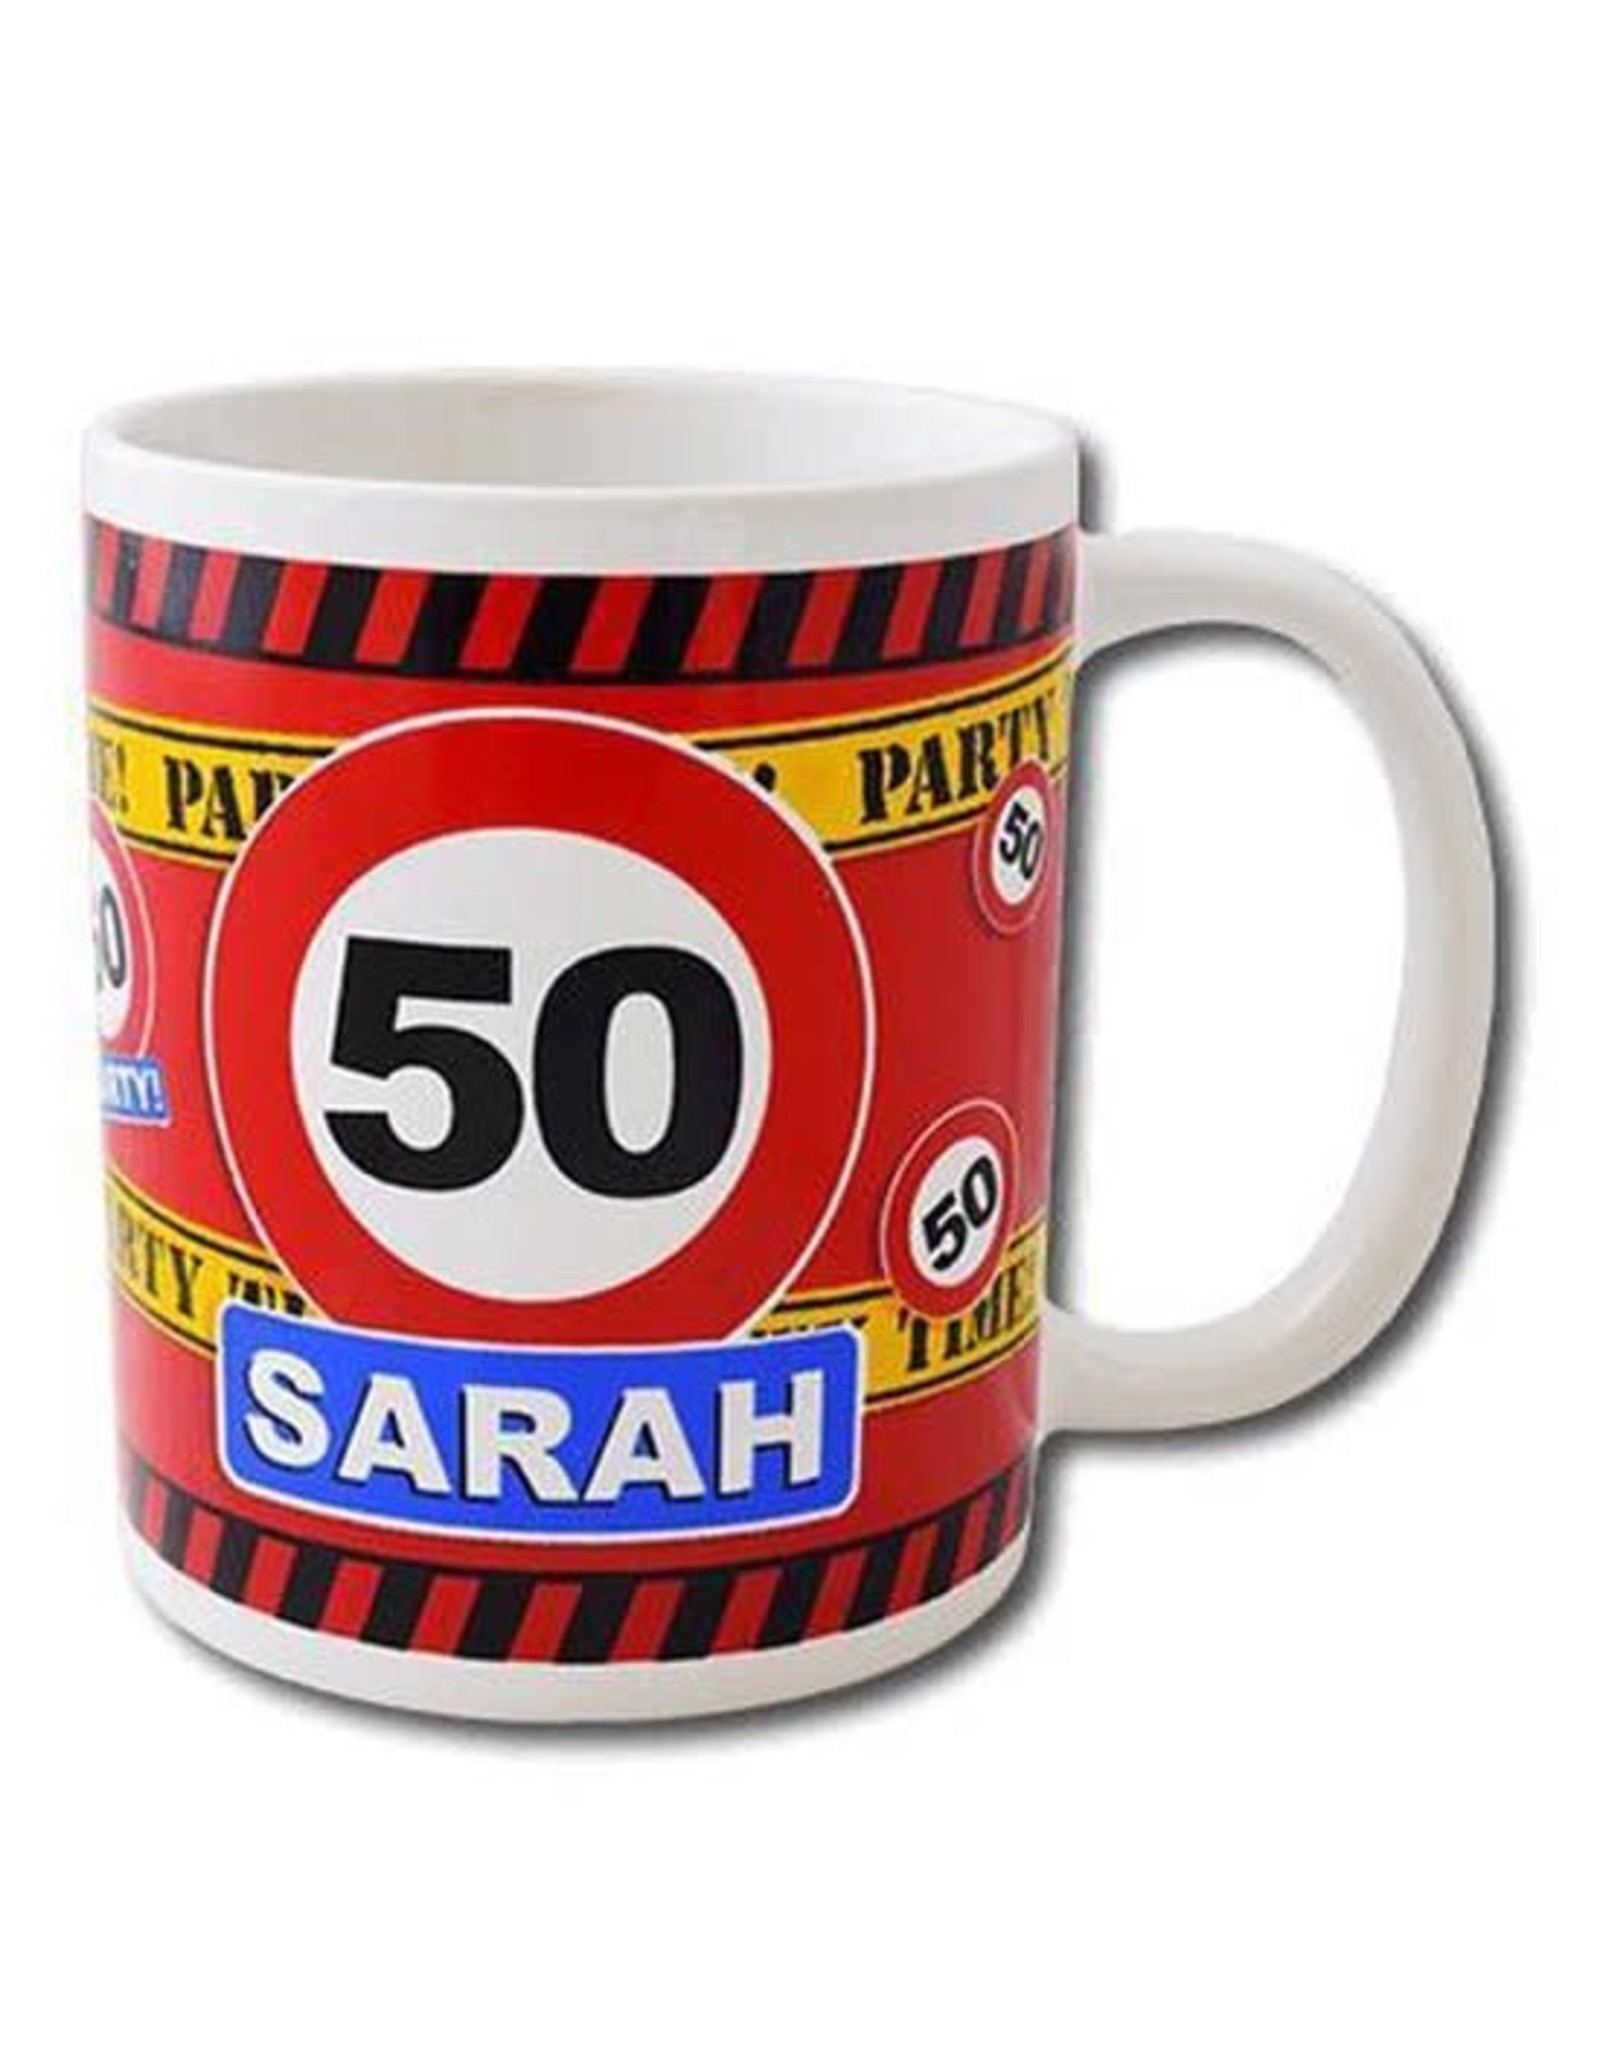 Verkeersbord Mok - 50 Sarah